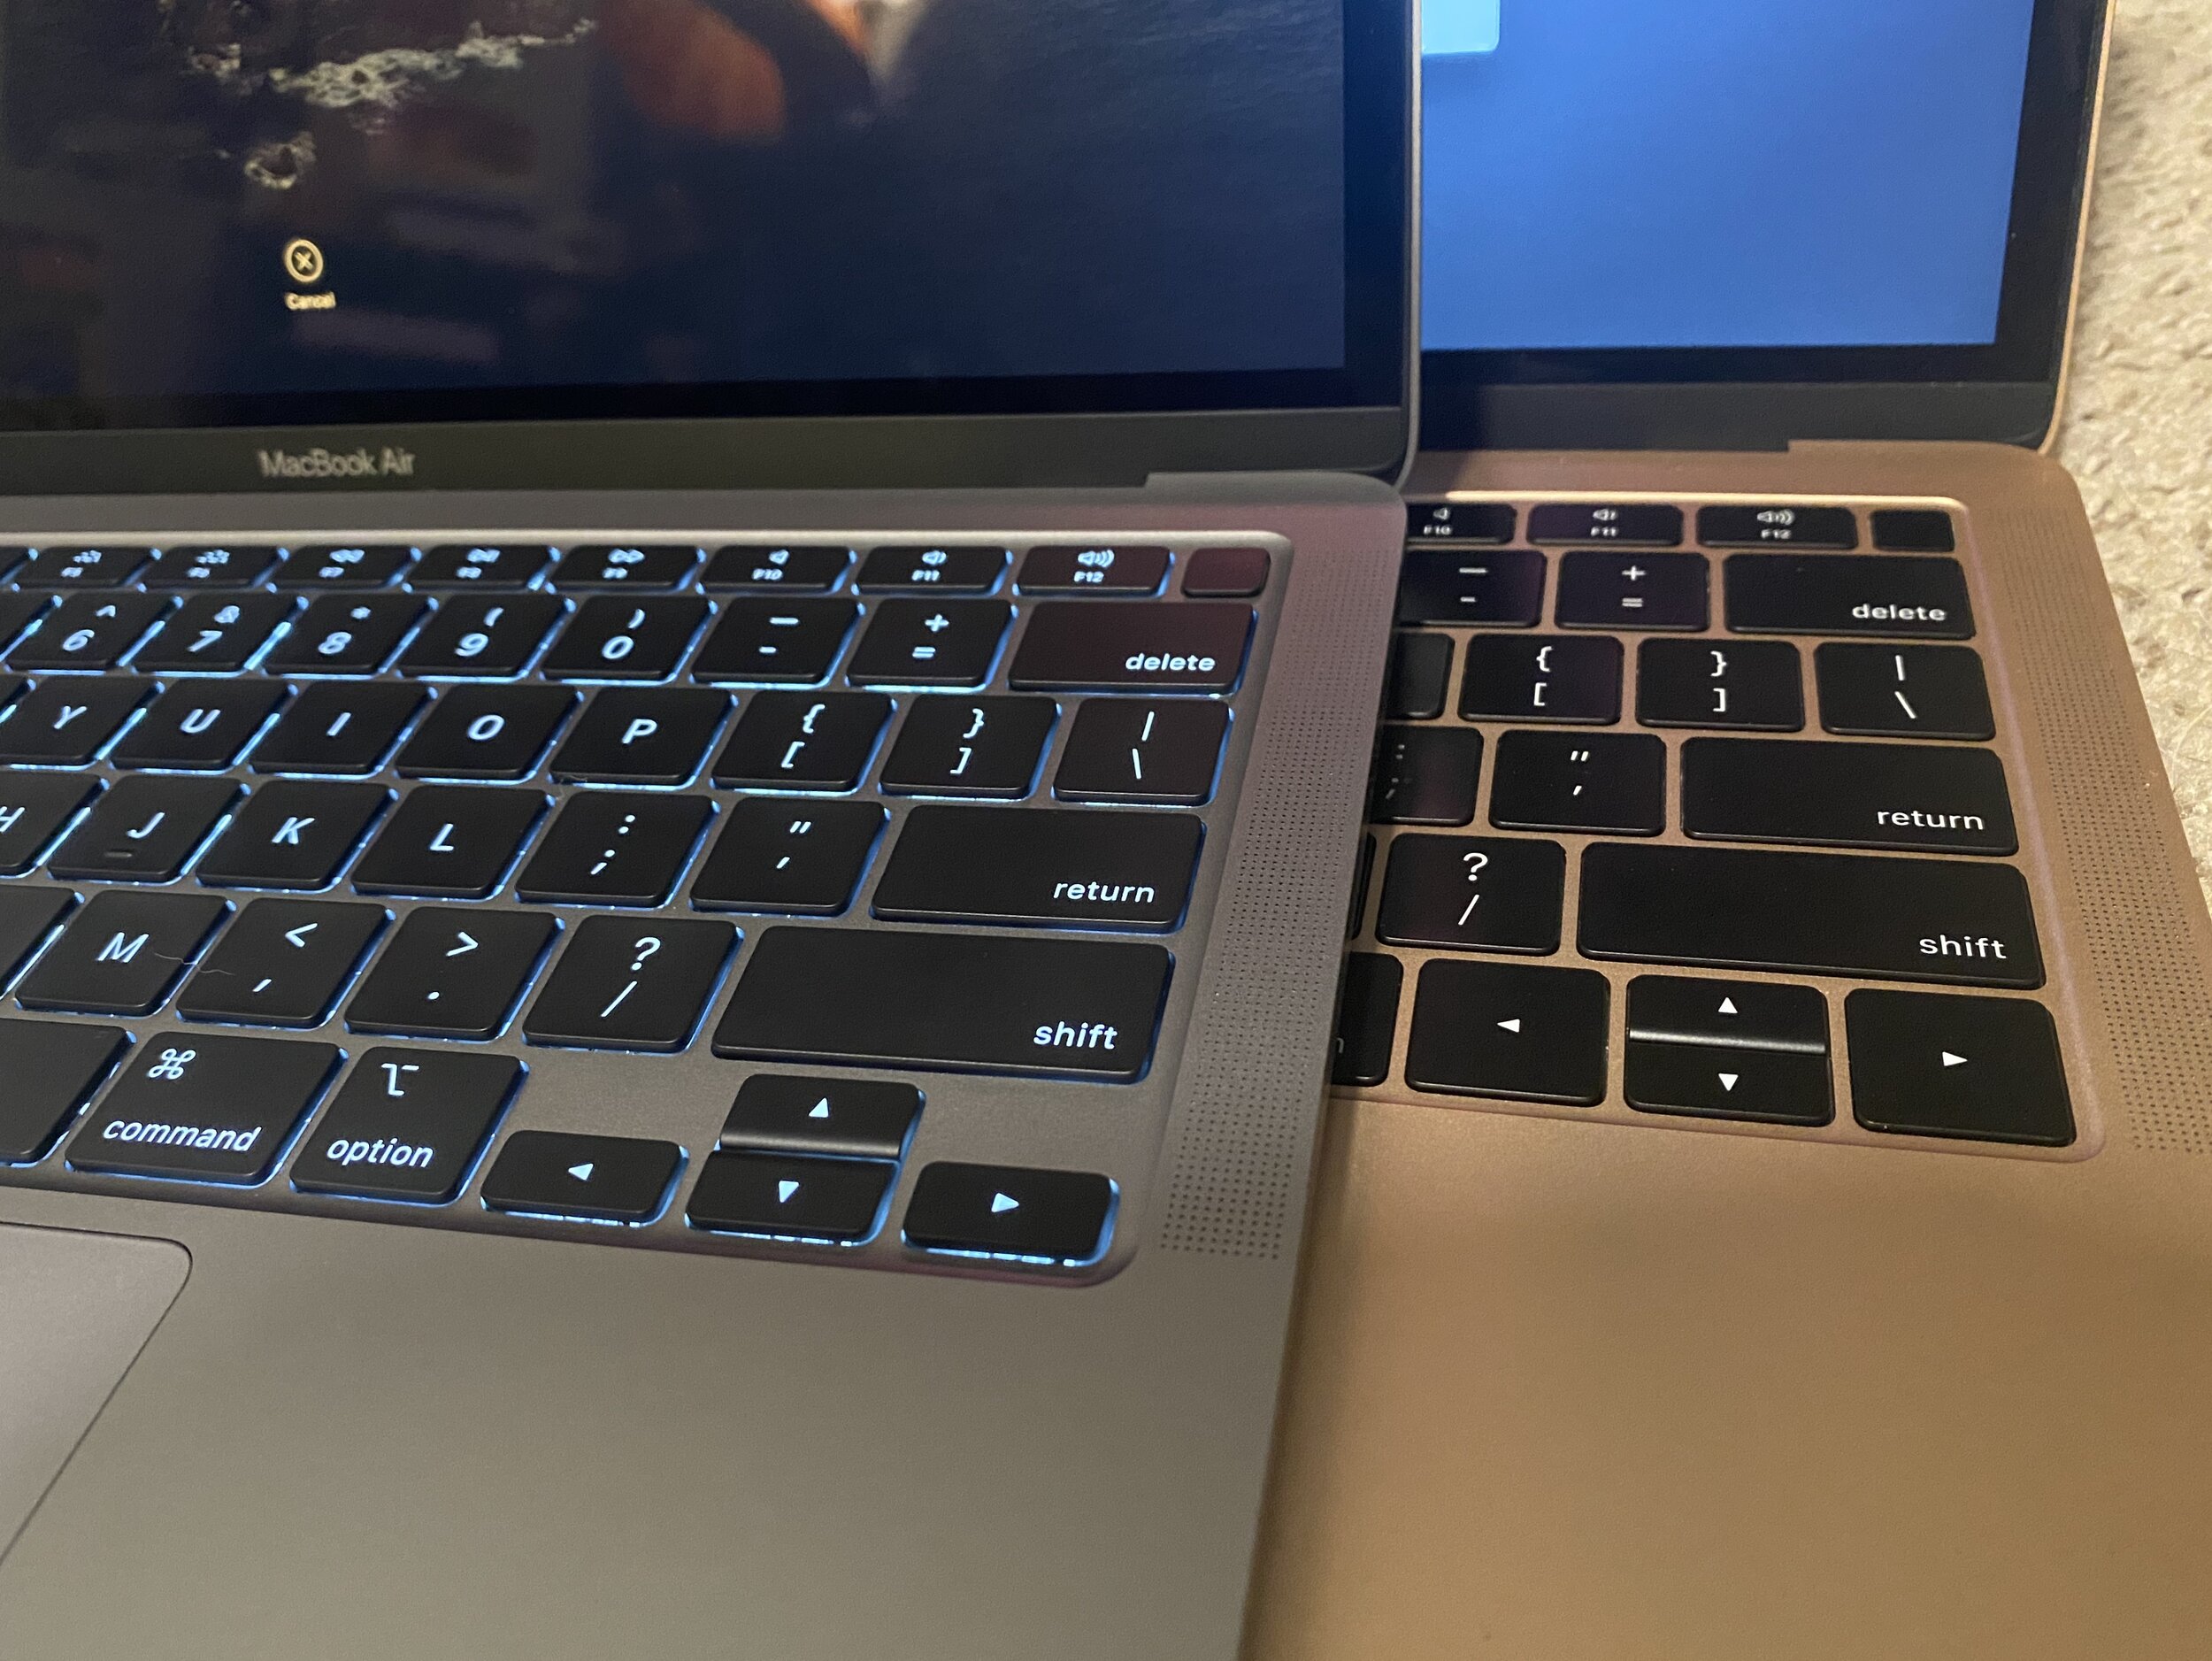 Apple MacBook Air (2020) Laptop Review: The return of the Mac